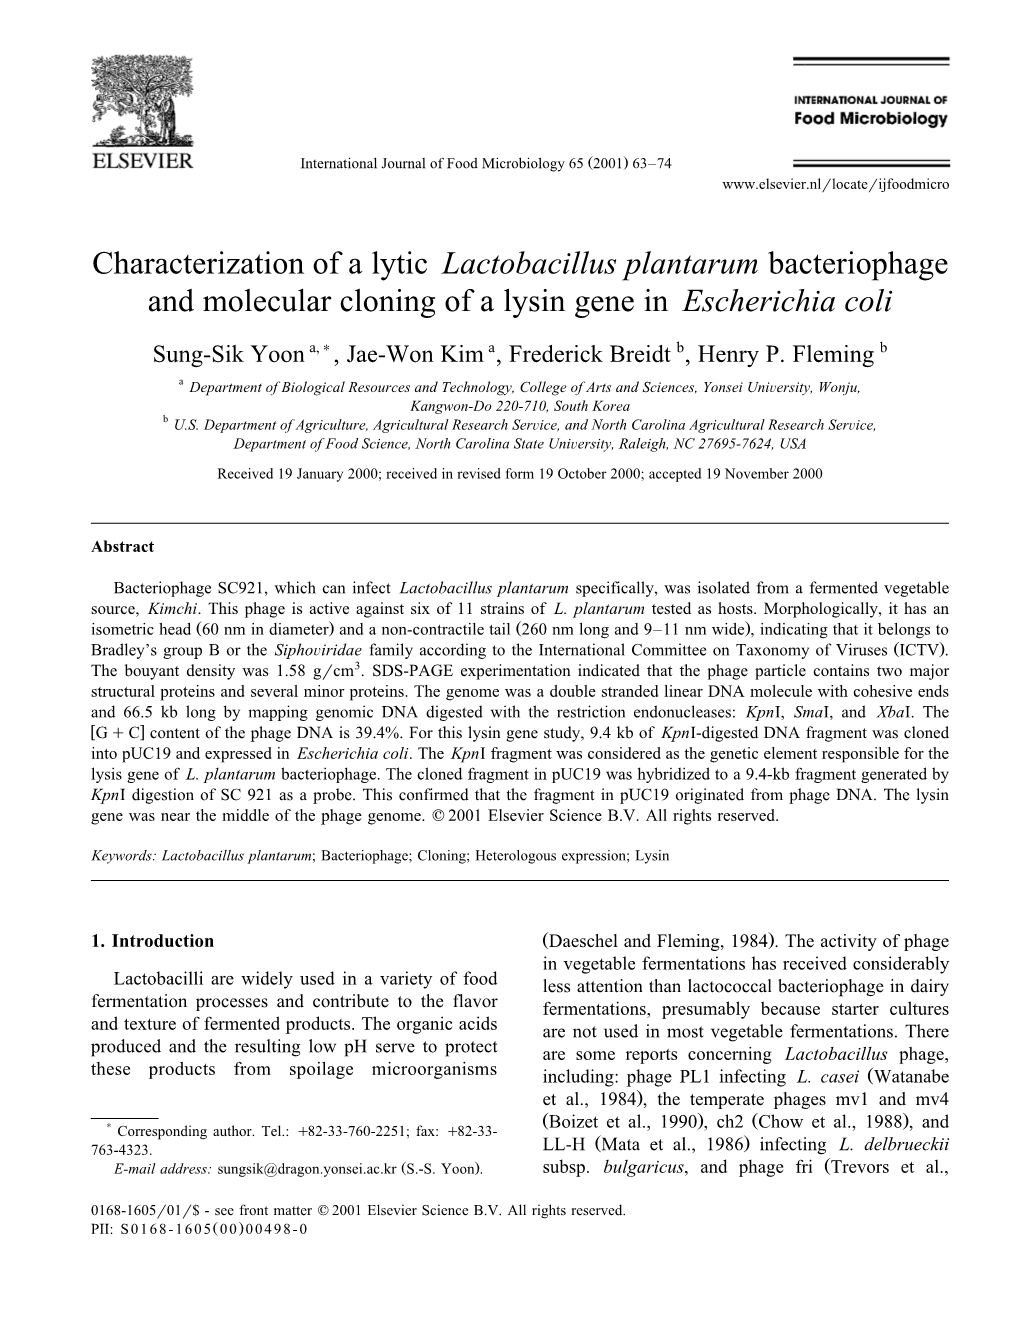 Characterization of a Lytic Lactobacillus Plantarum Bacteriophage and Molecular Cloning of a Lysin Gene in Escherichia Coli